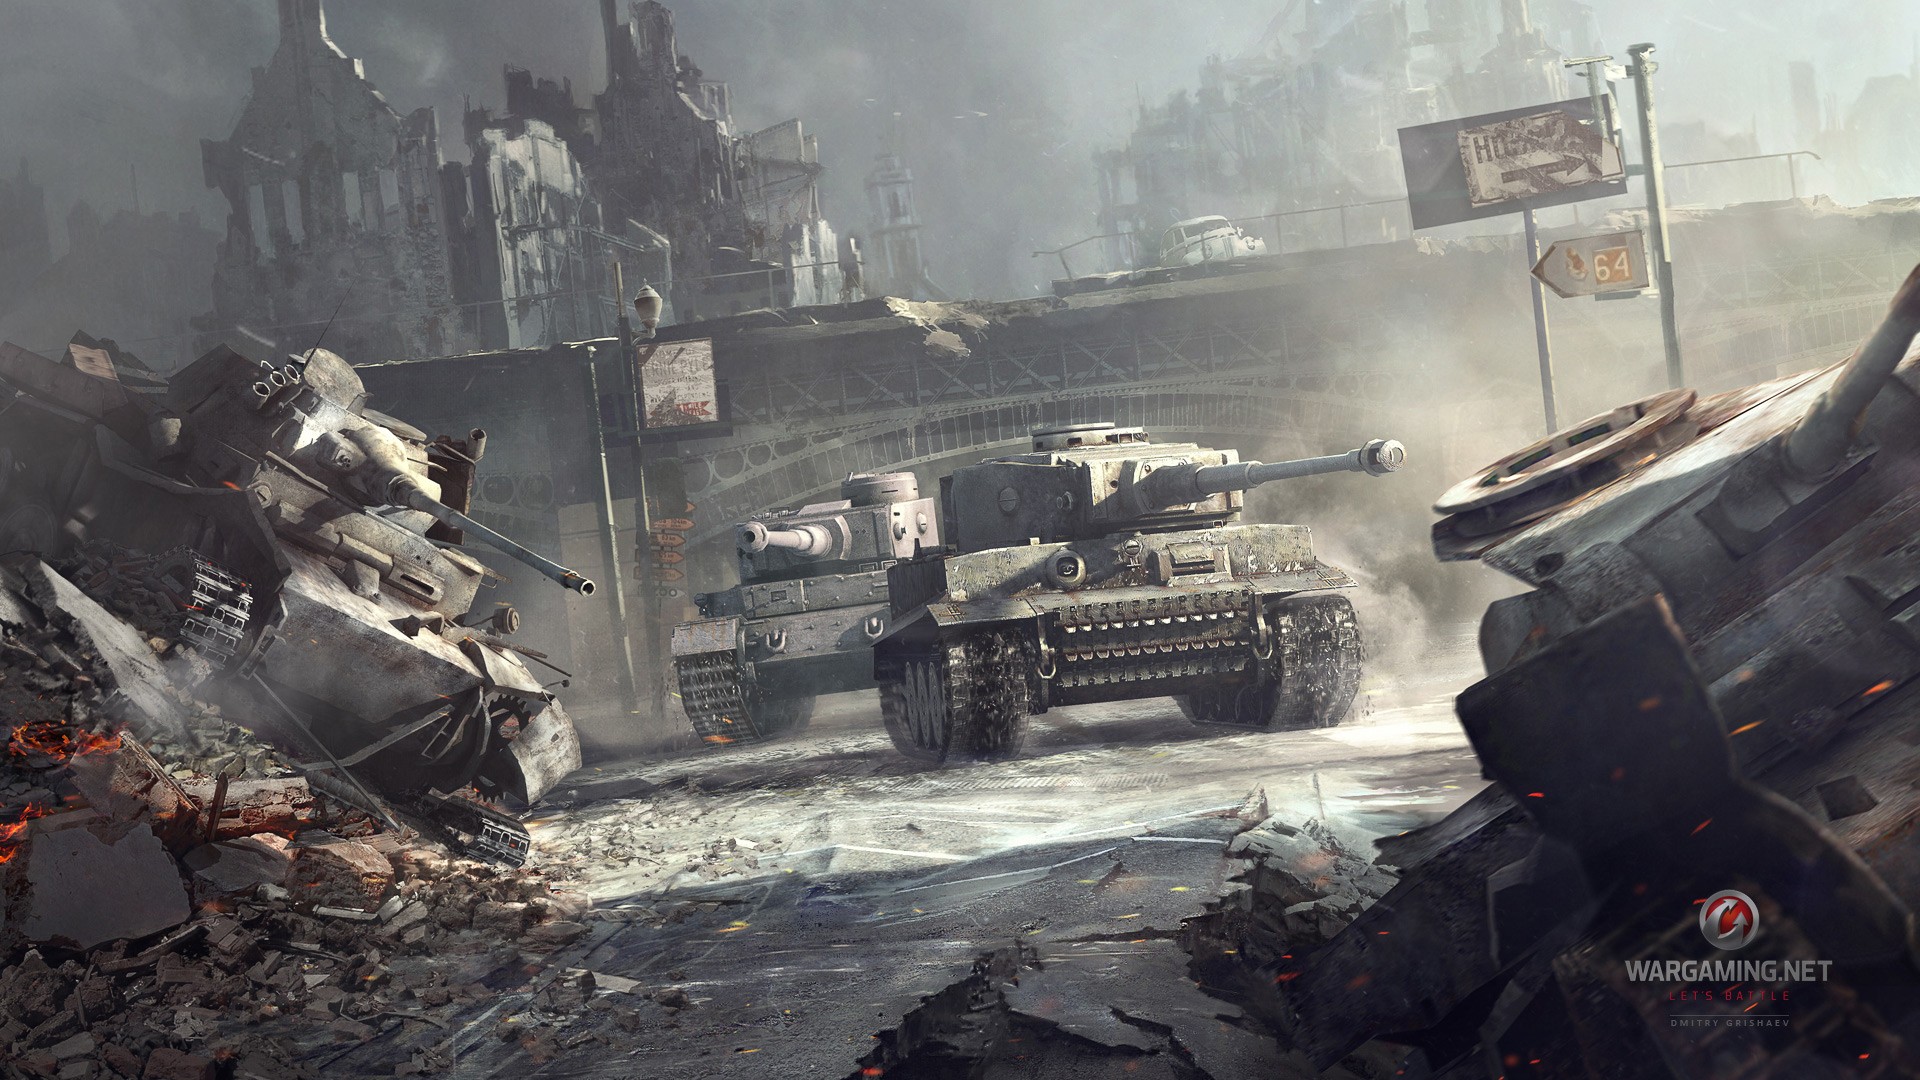 General 1920x1080 tank Tiger I World of Tanks video games wargaming vehicle ruins PC gaming video game art war military vehicle